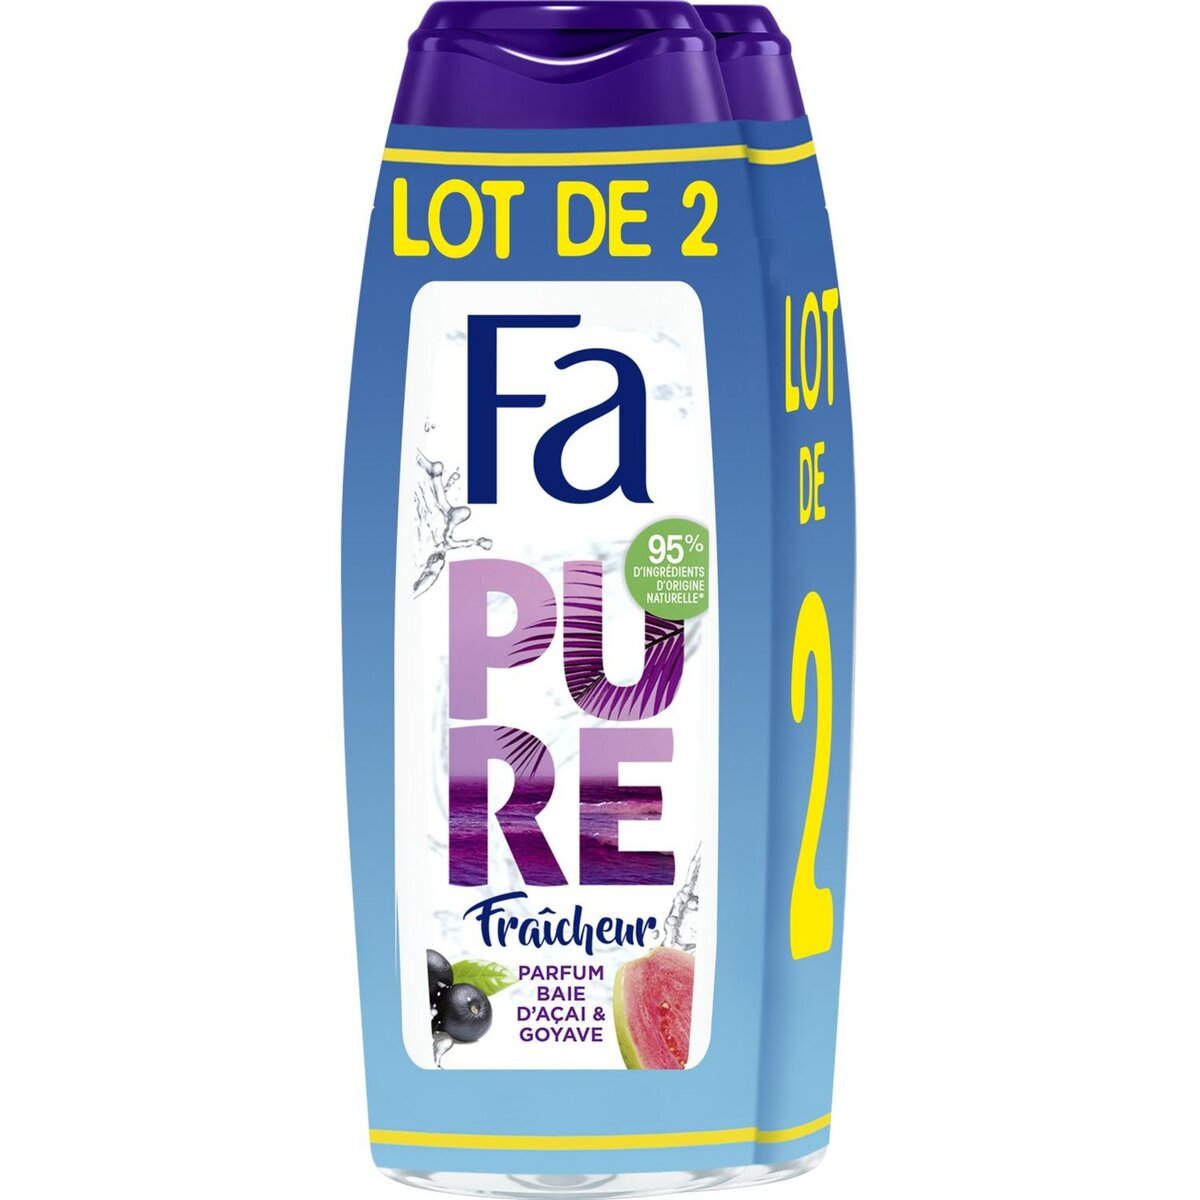 FA Pure Gel douche parfum baie d'açai & goyave 2 pièces 2x250ml